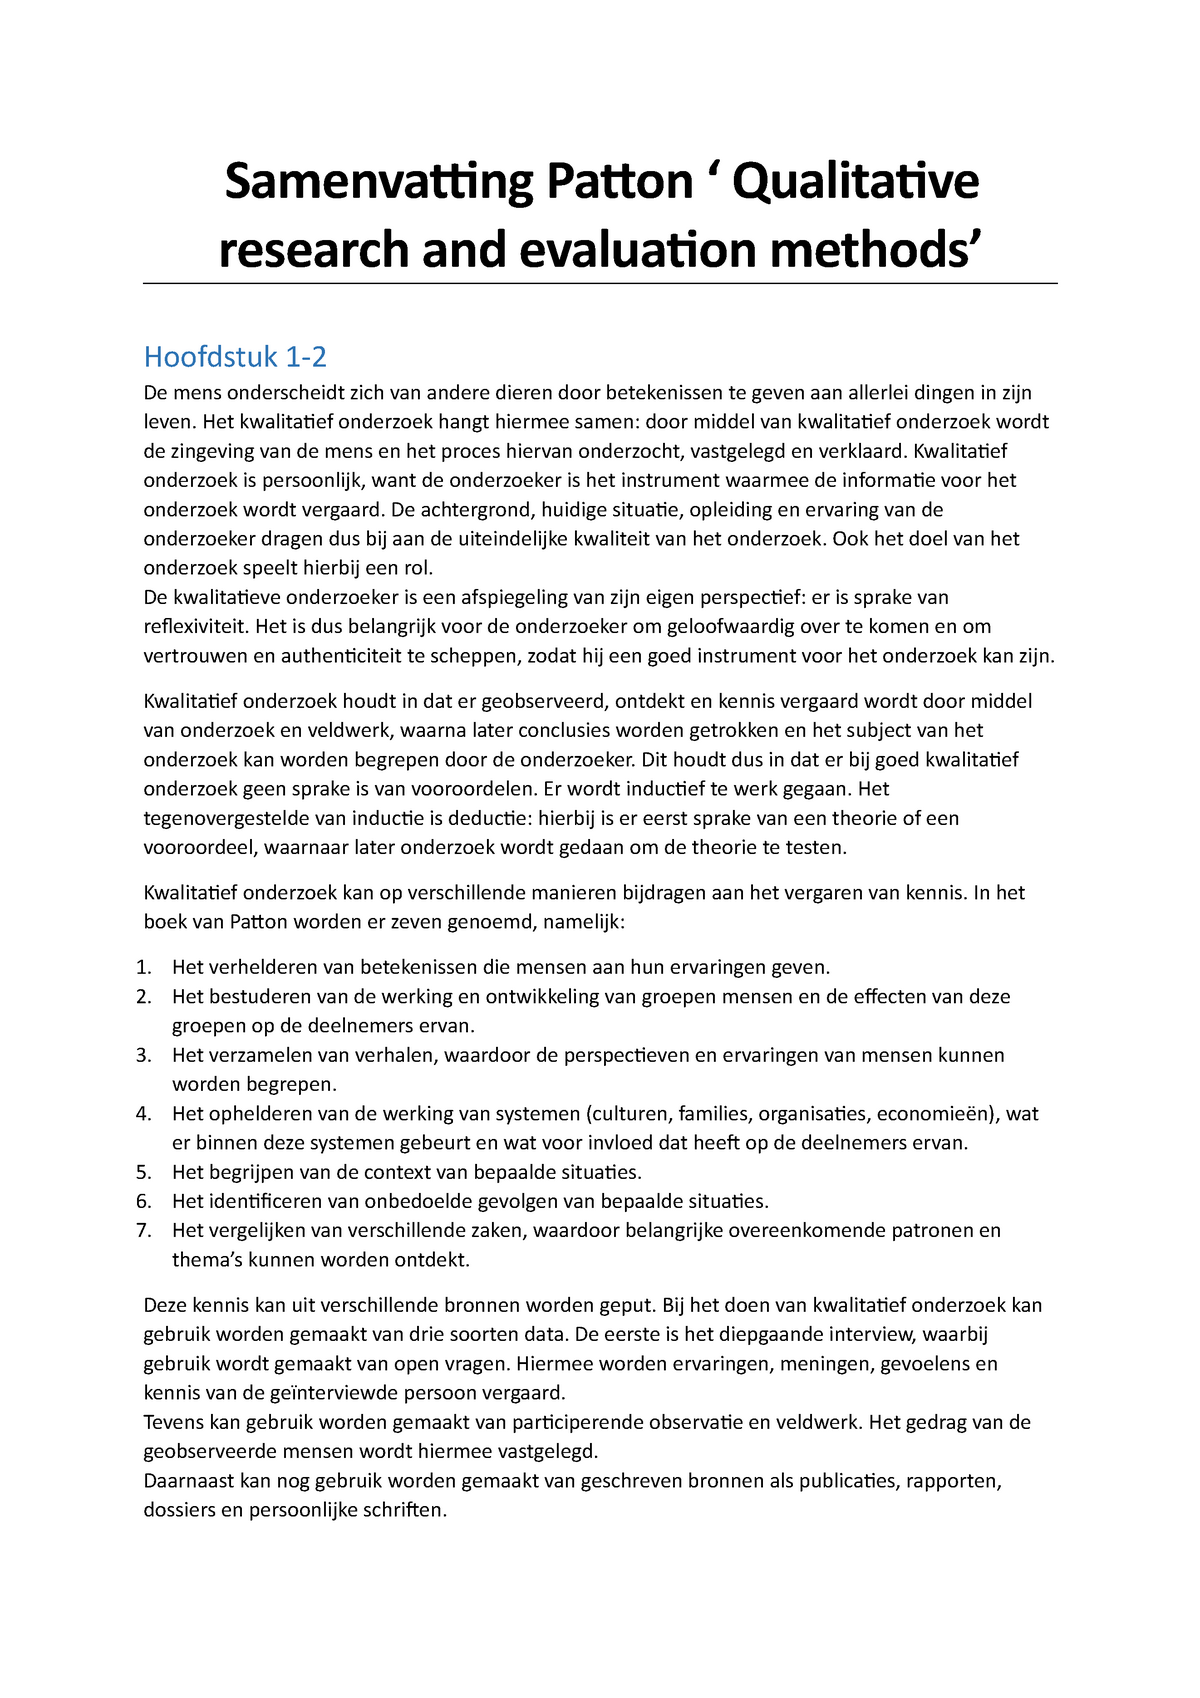 patton m. q. (1990). qualitative evaluation and research methods